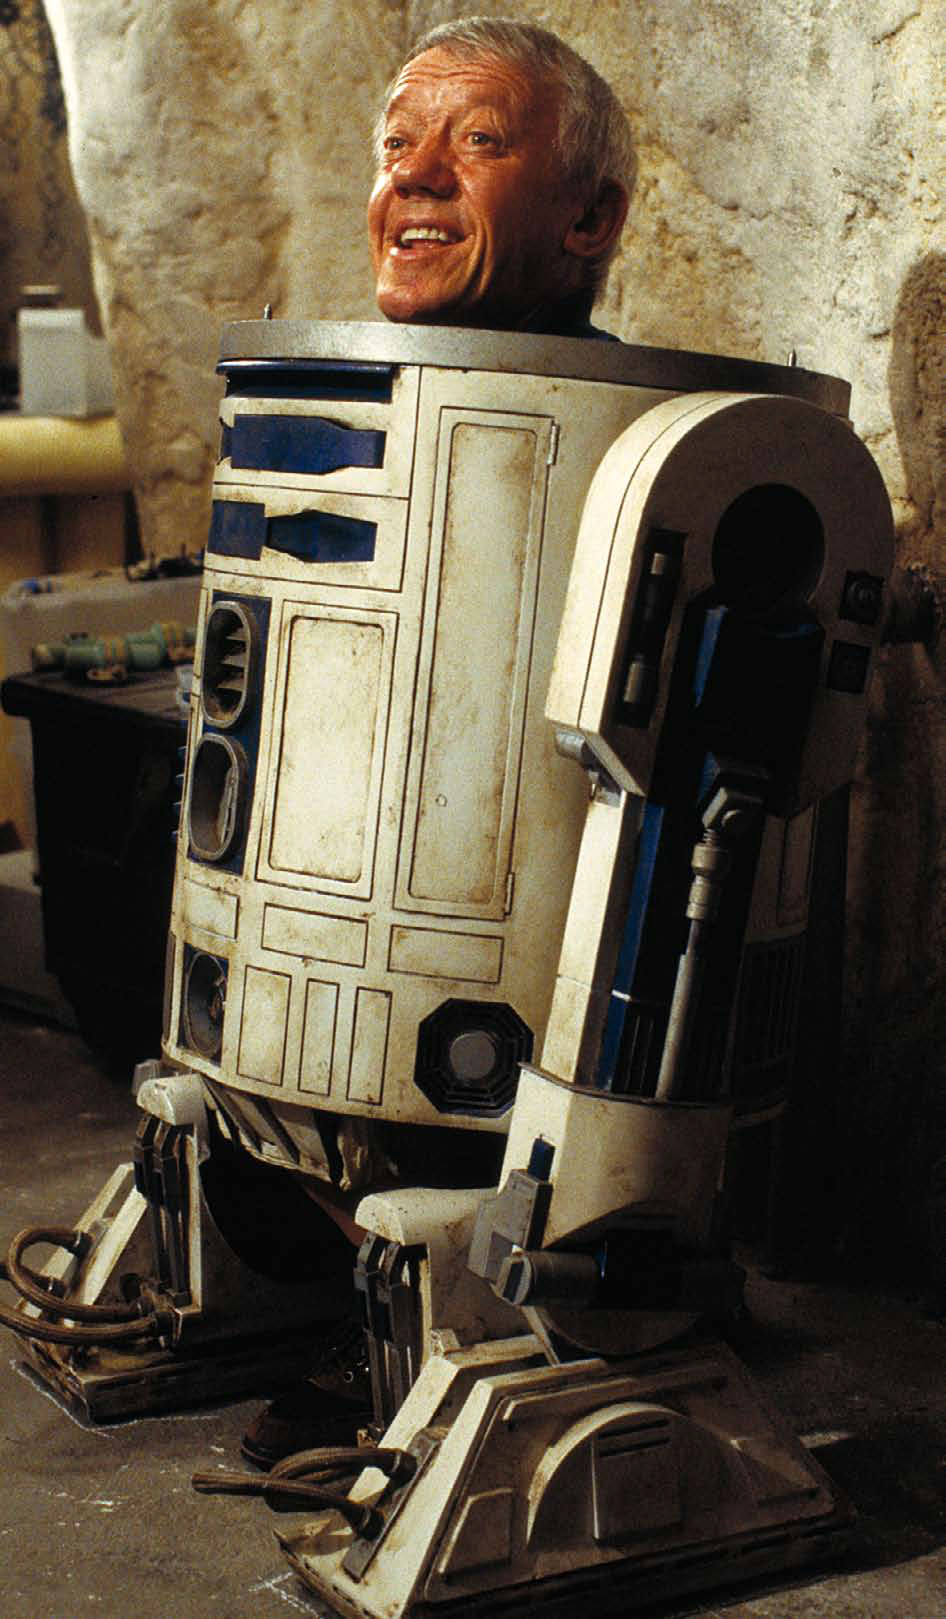 Kenny Baker as R2-D2